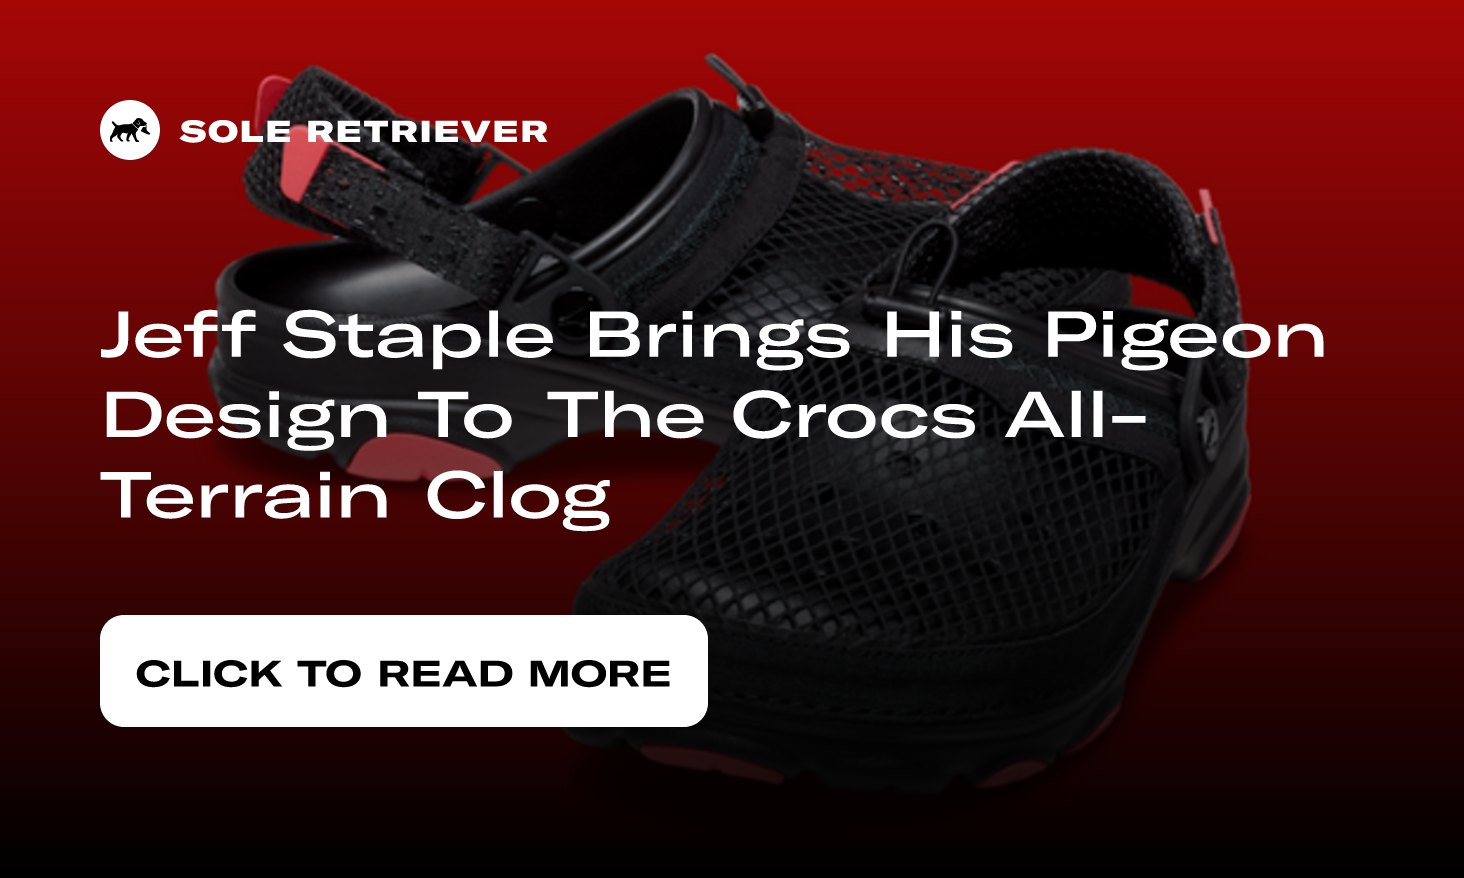 Jeff Staple Brings His Pigeon Design To The Crocs All-Terrain Clog